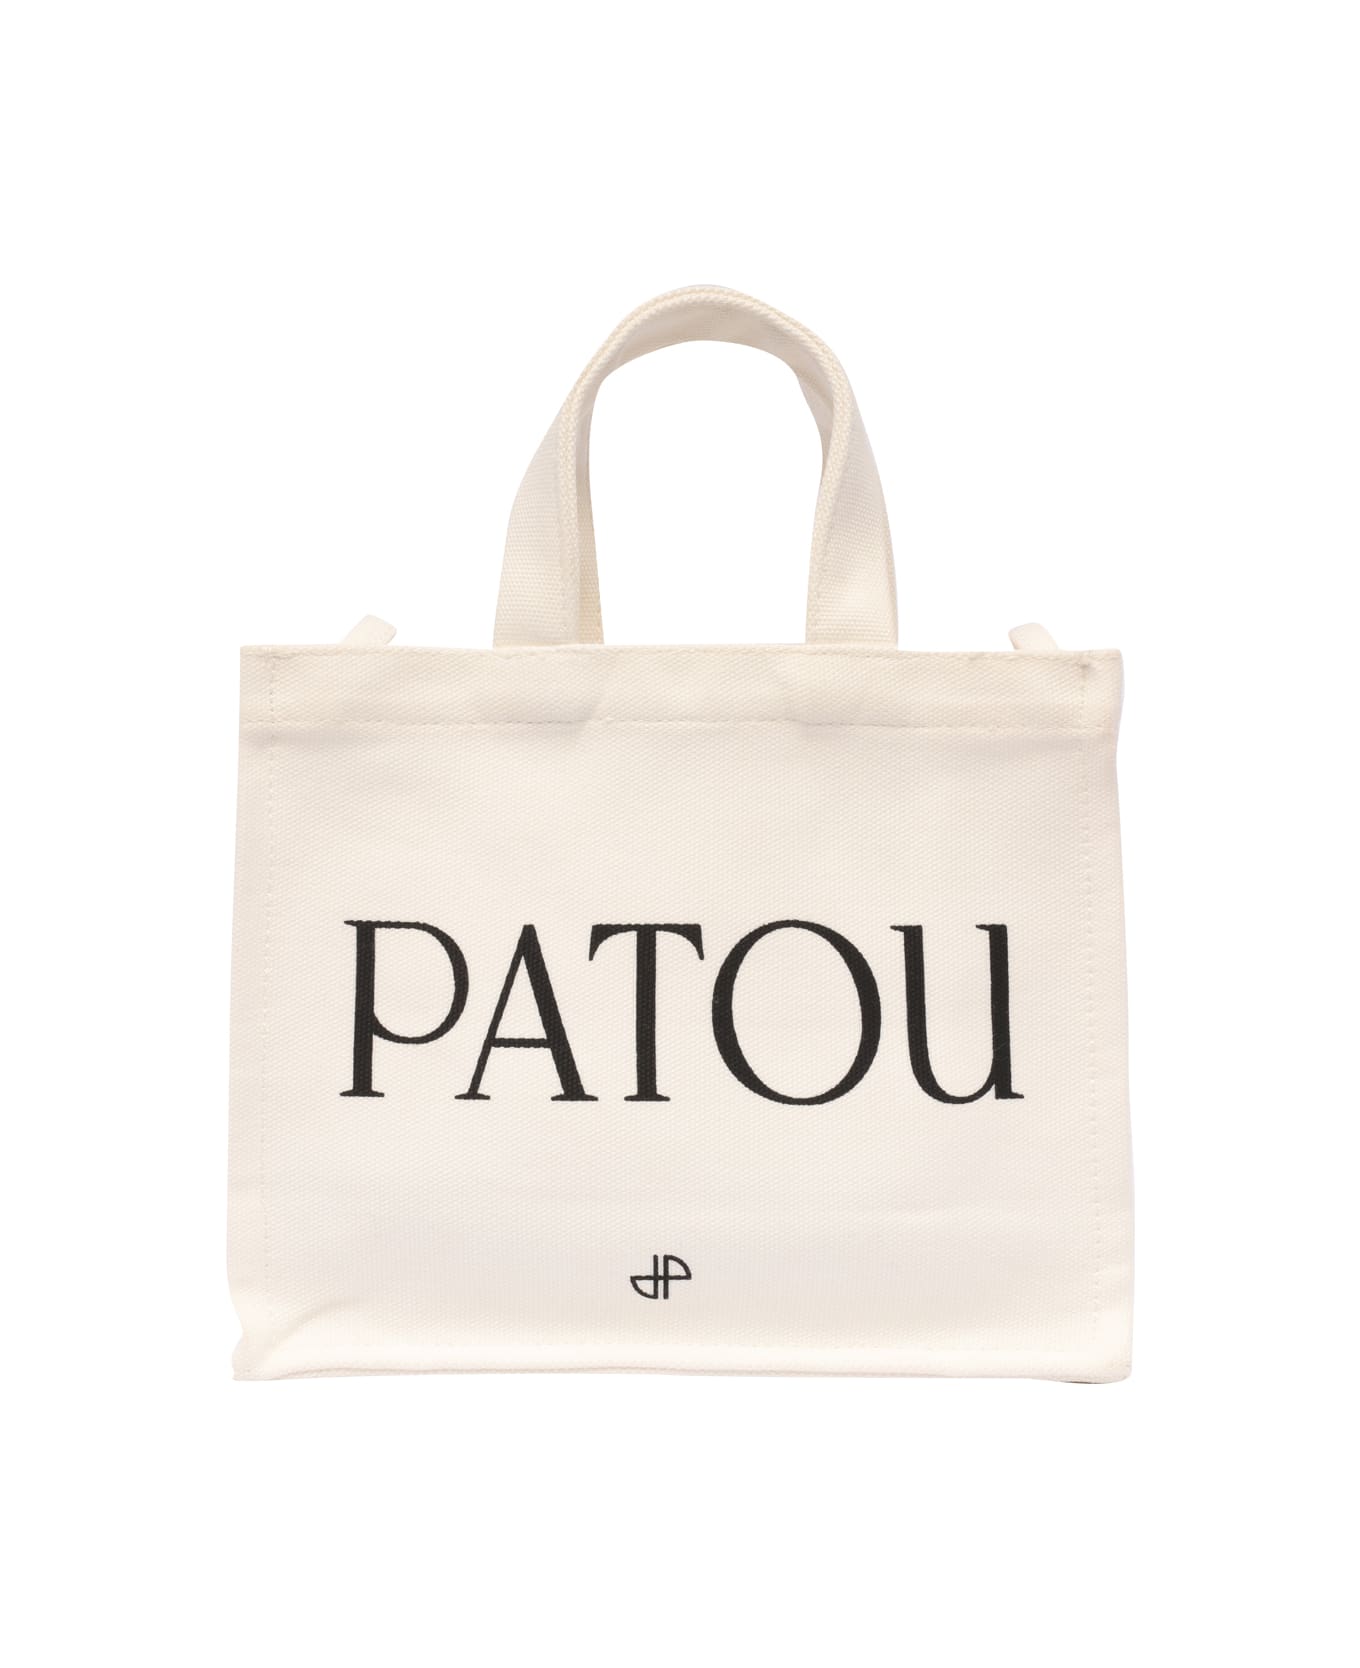 Patou Logo Tote Bag - Crema